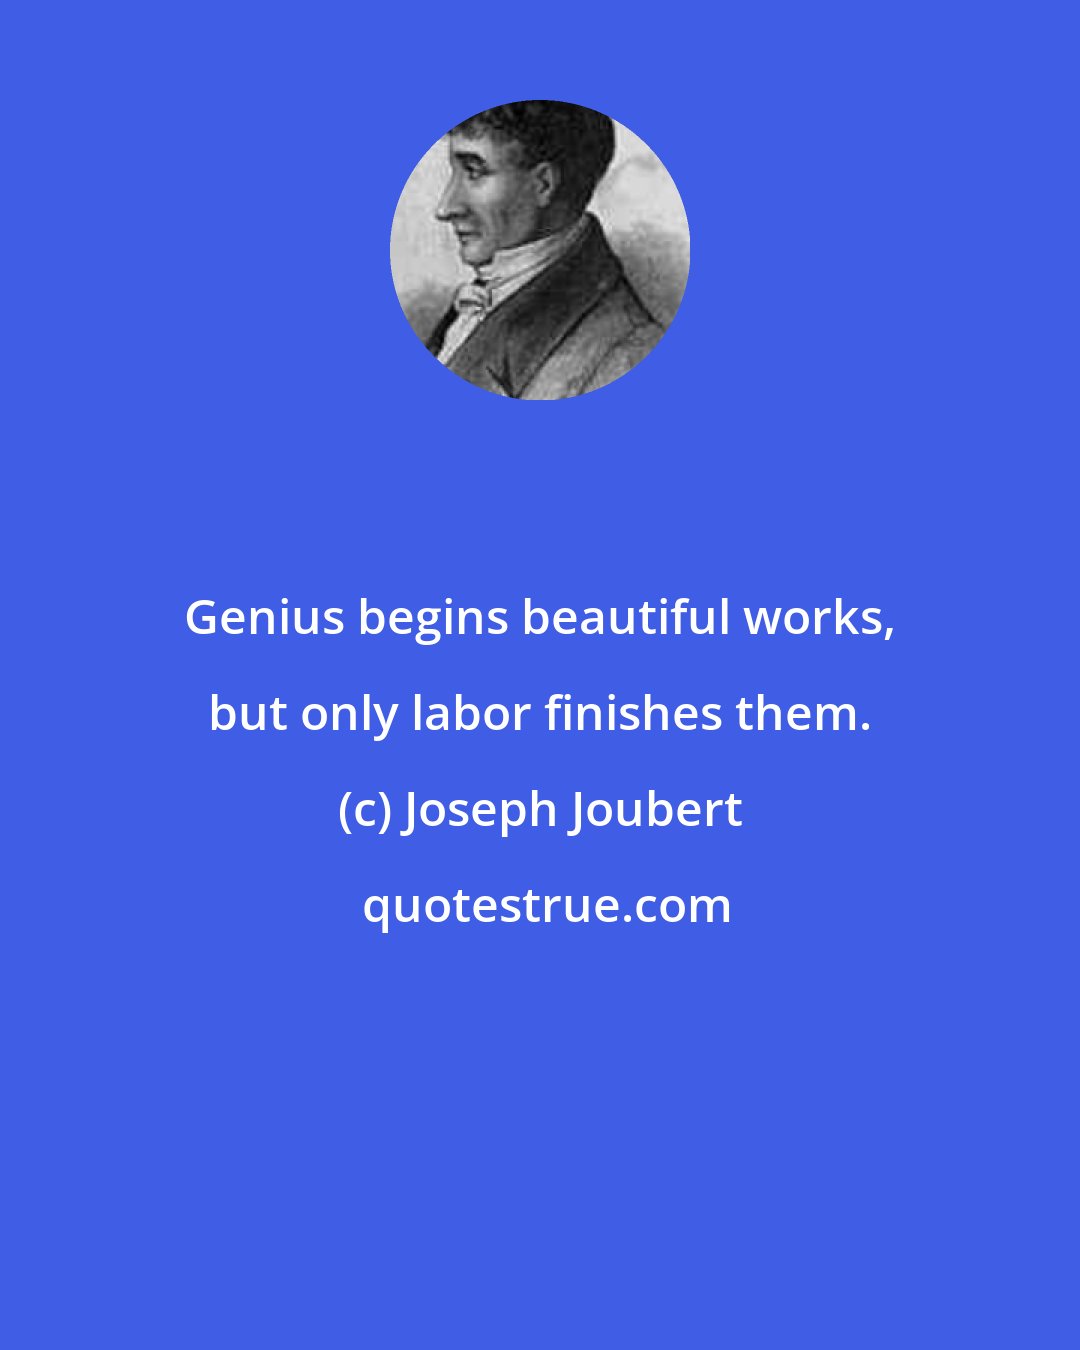 Joseph Joubert: Genius begins beautiful works, but only labor finishes them.